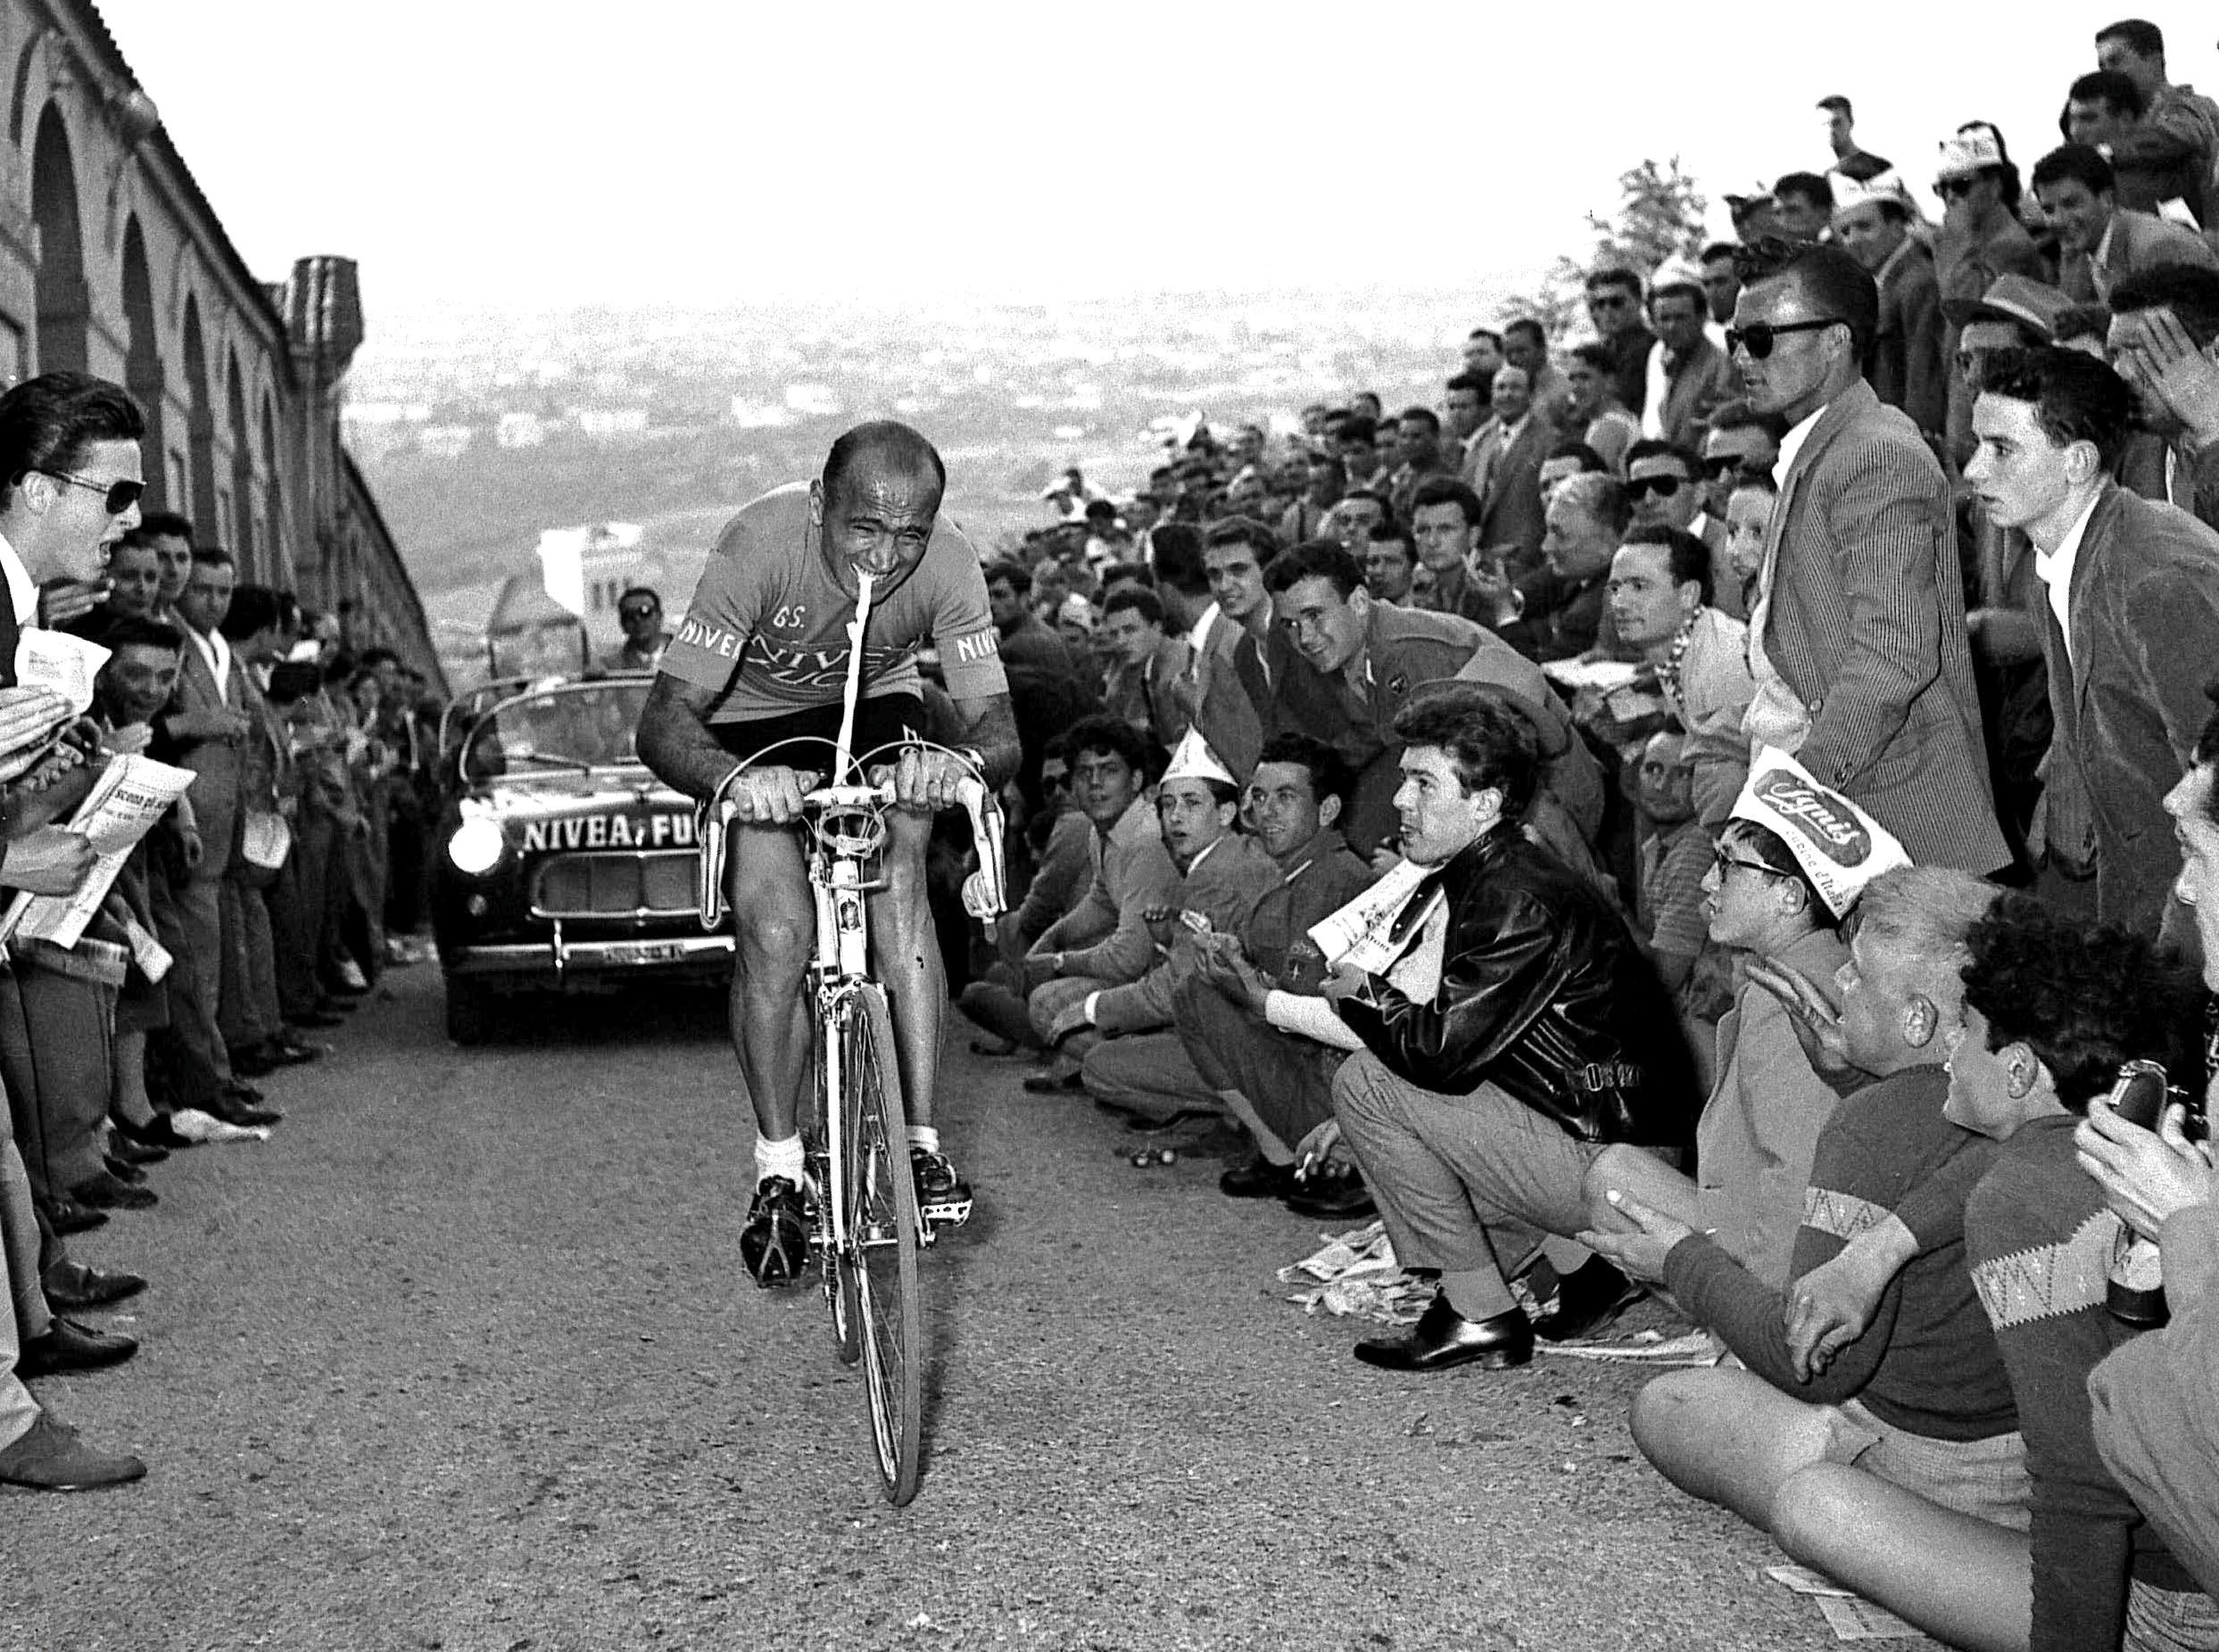 Florenzo racing his Masi bicycle